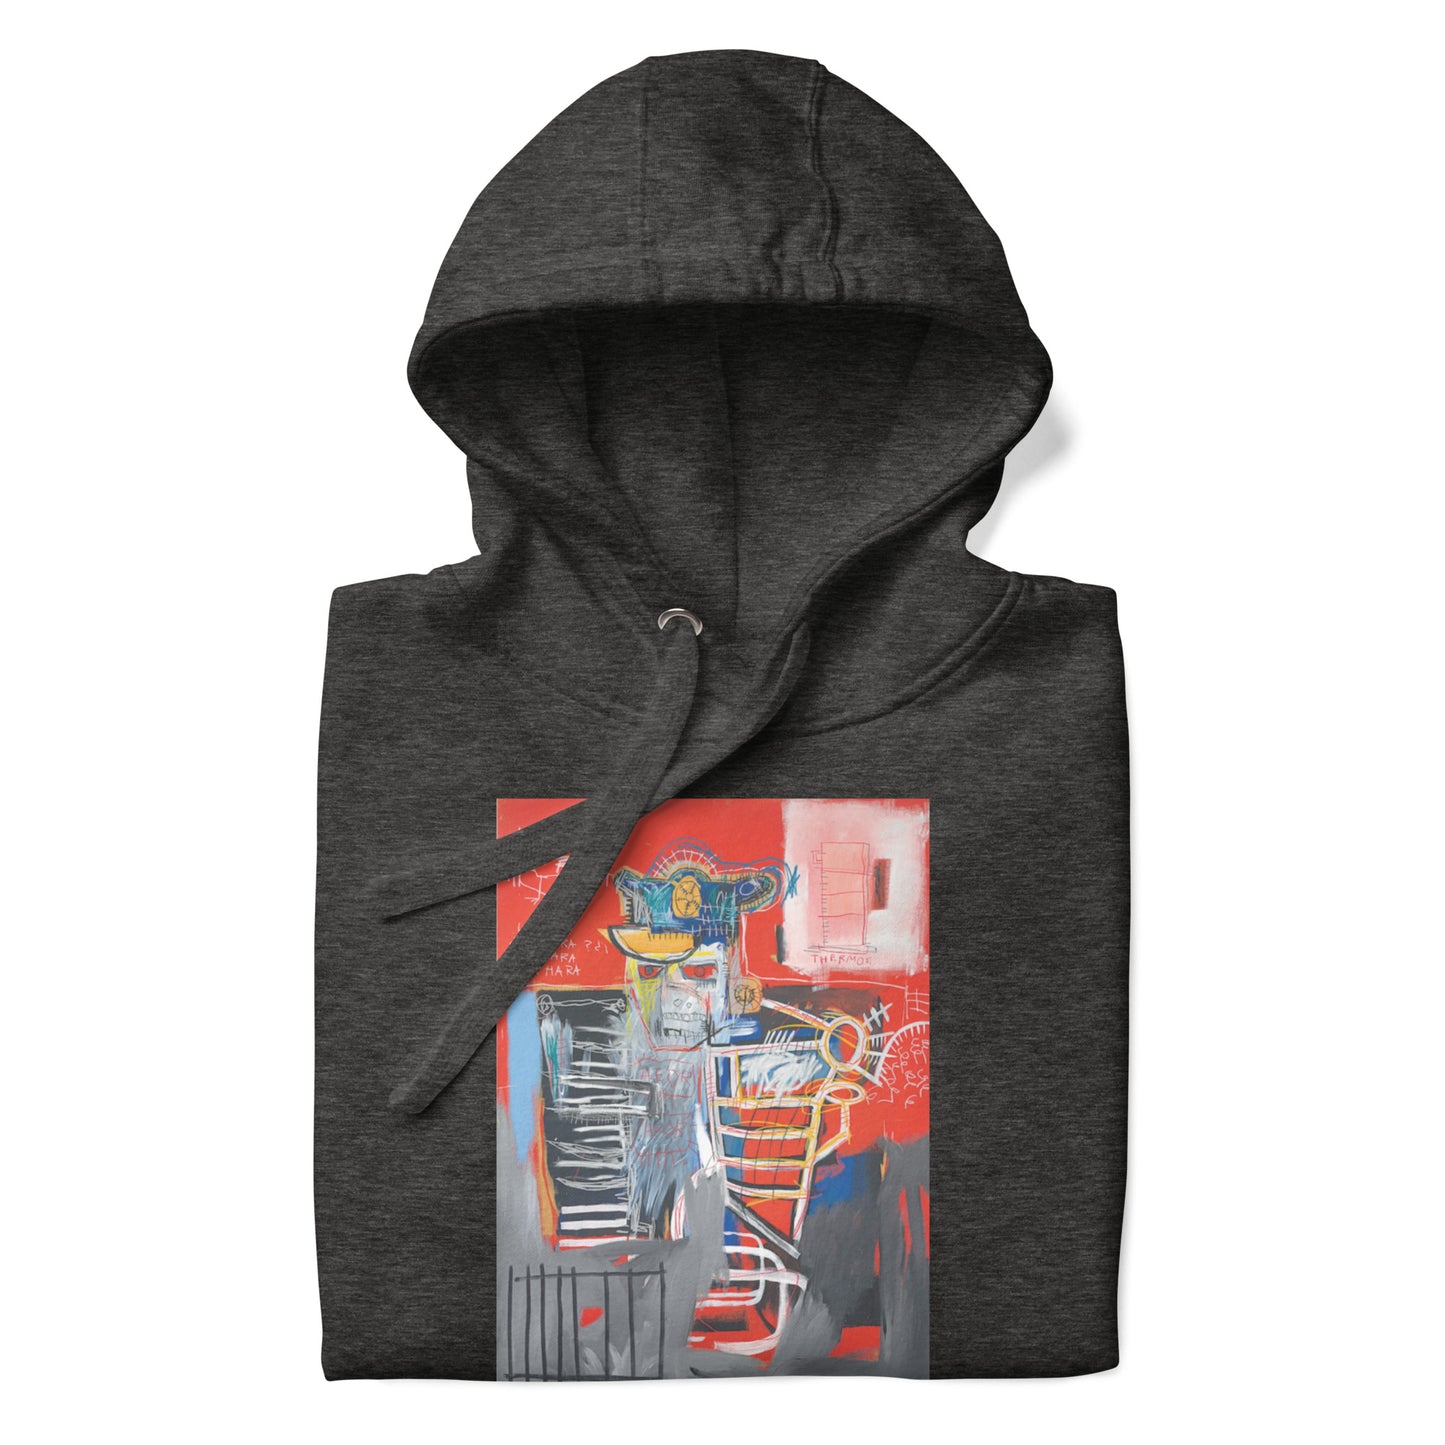 Jean-Michel Basquiat "La Hara" Artwork Printed Premium Streetwear Sweatshirt Hoodie Charcoal Grey